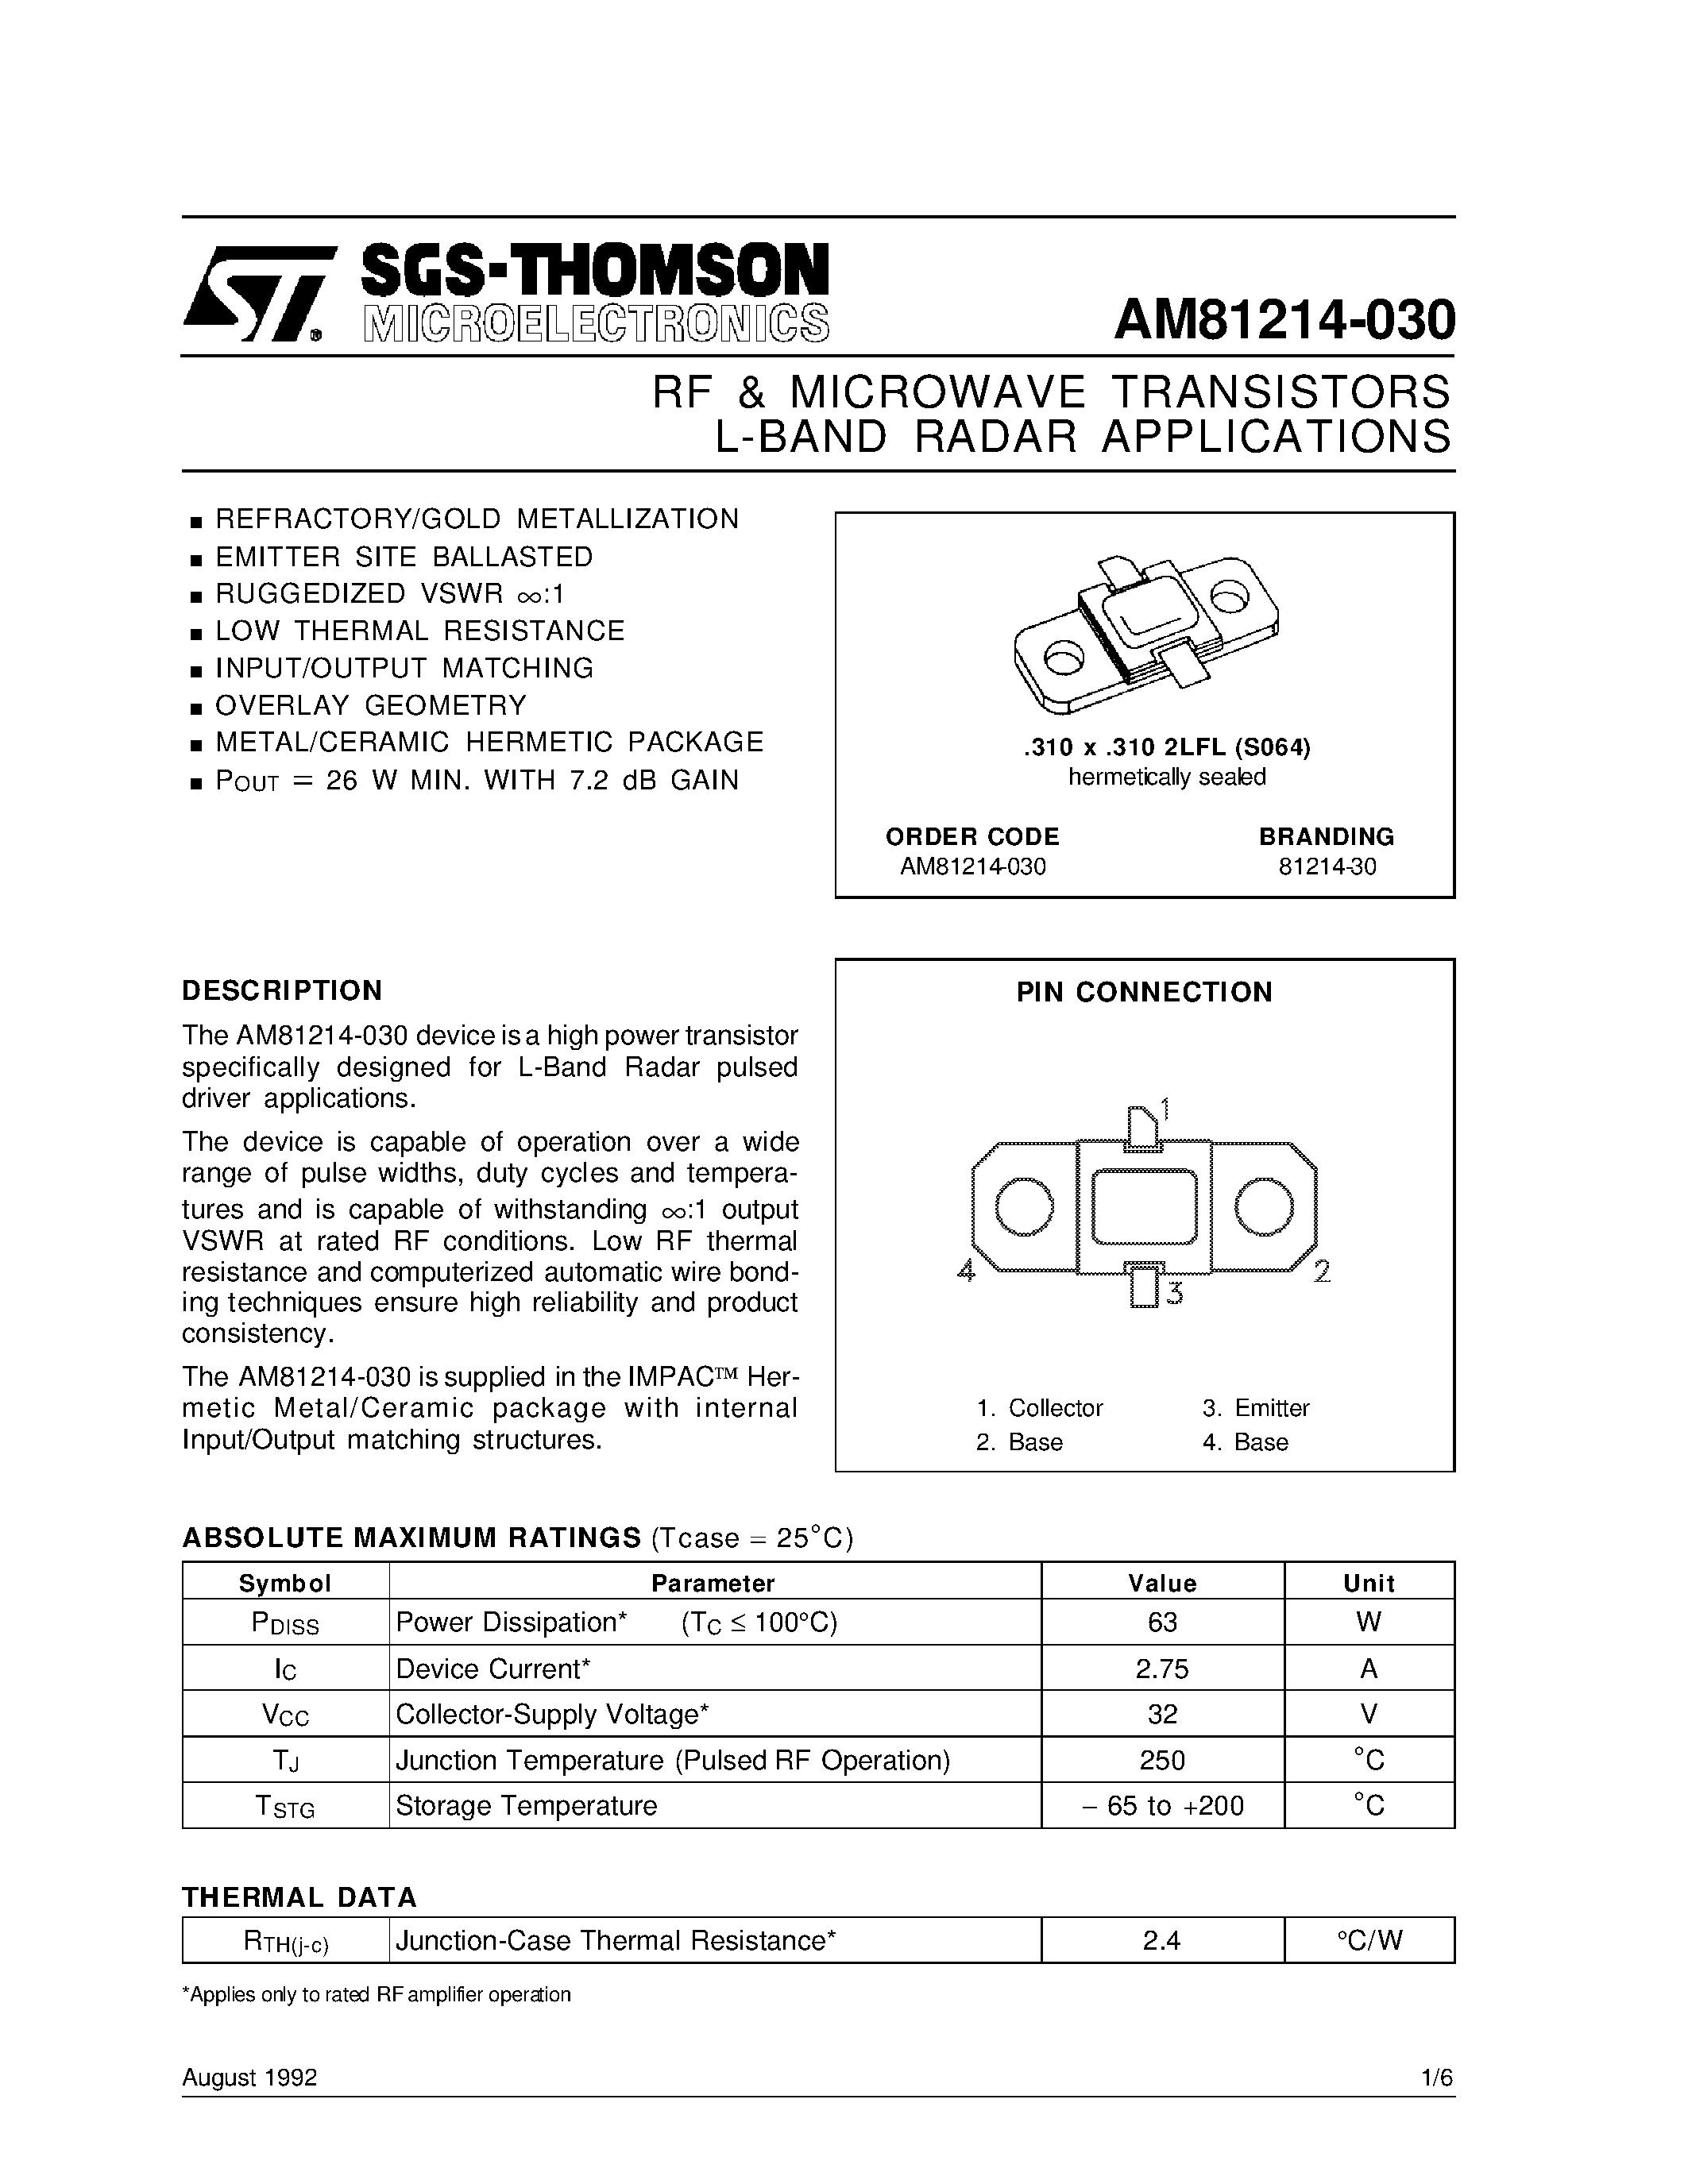 Datasheet AM81214-030 - L-BAND RADAR APPLICATIONS RF & MICROWAVE TRANSISTORS page 1